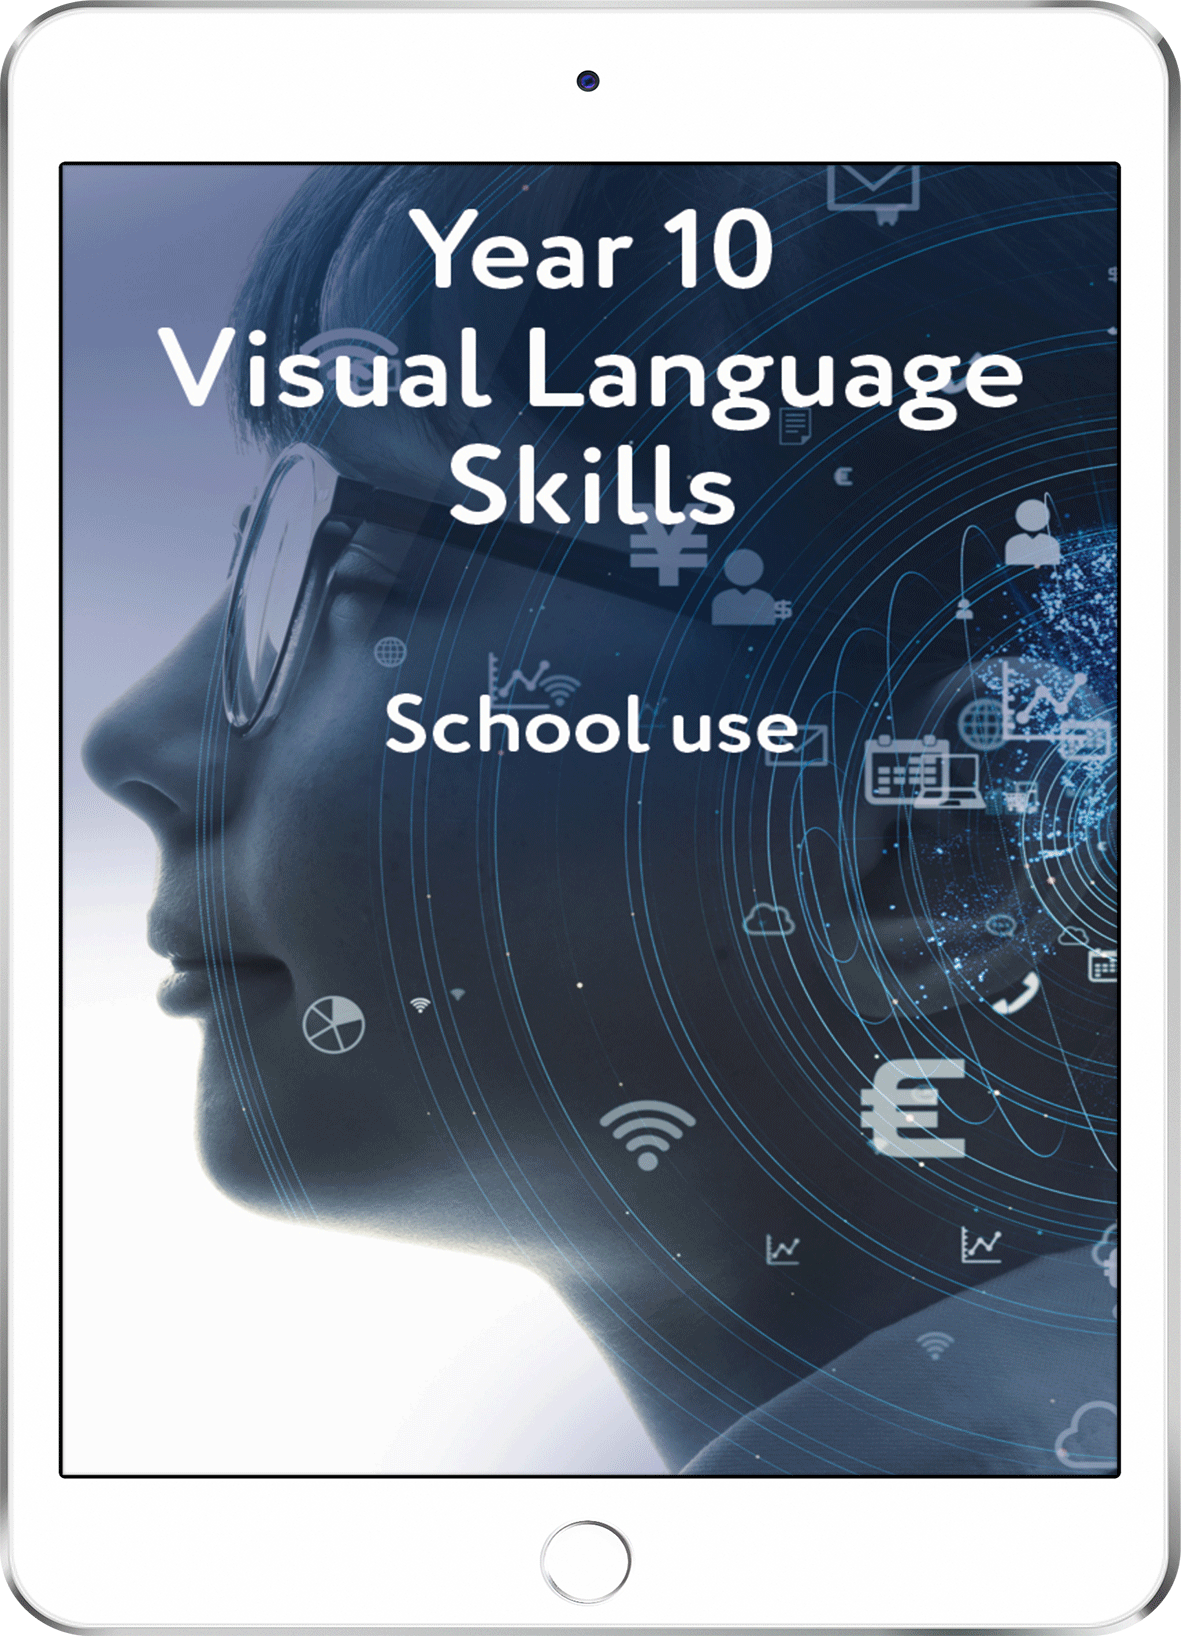 Year 10 Visual Language Skills - School Use